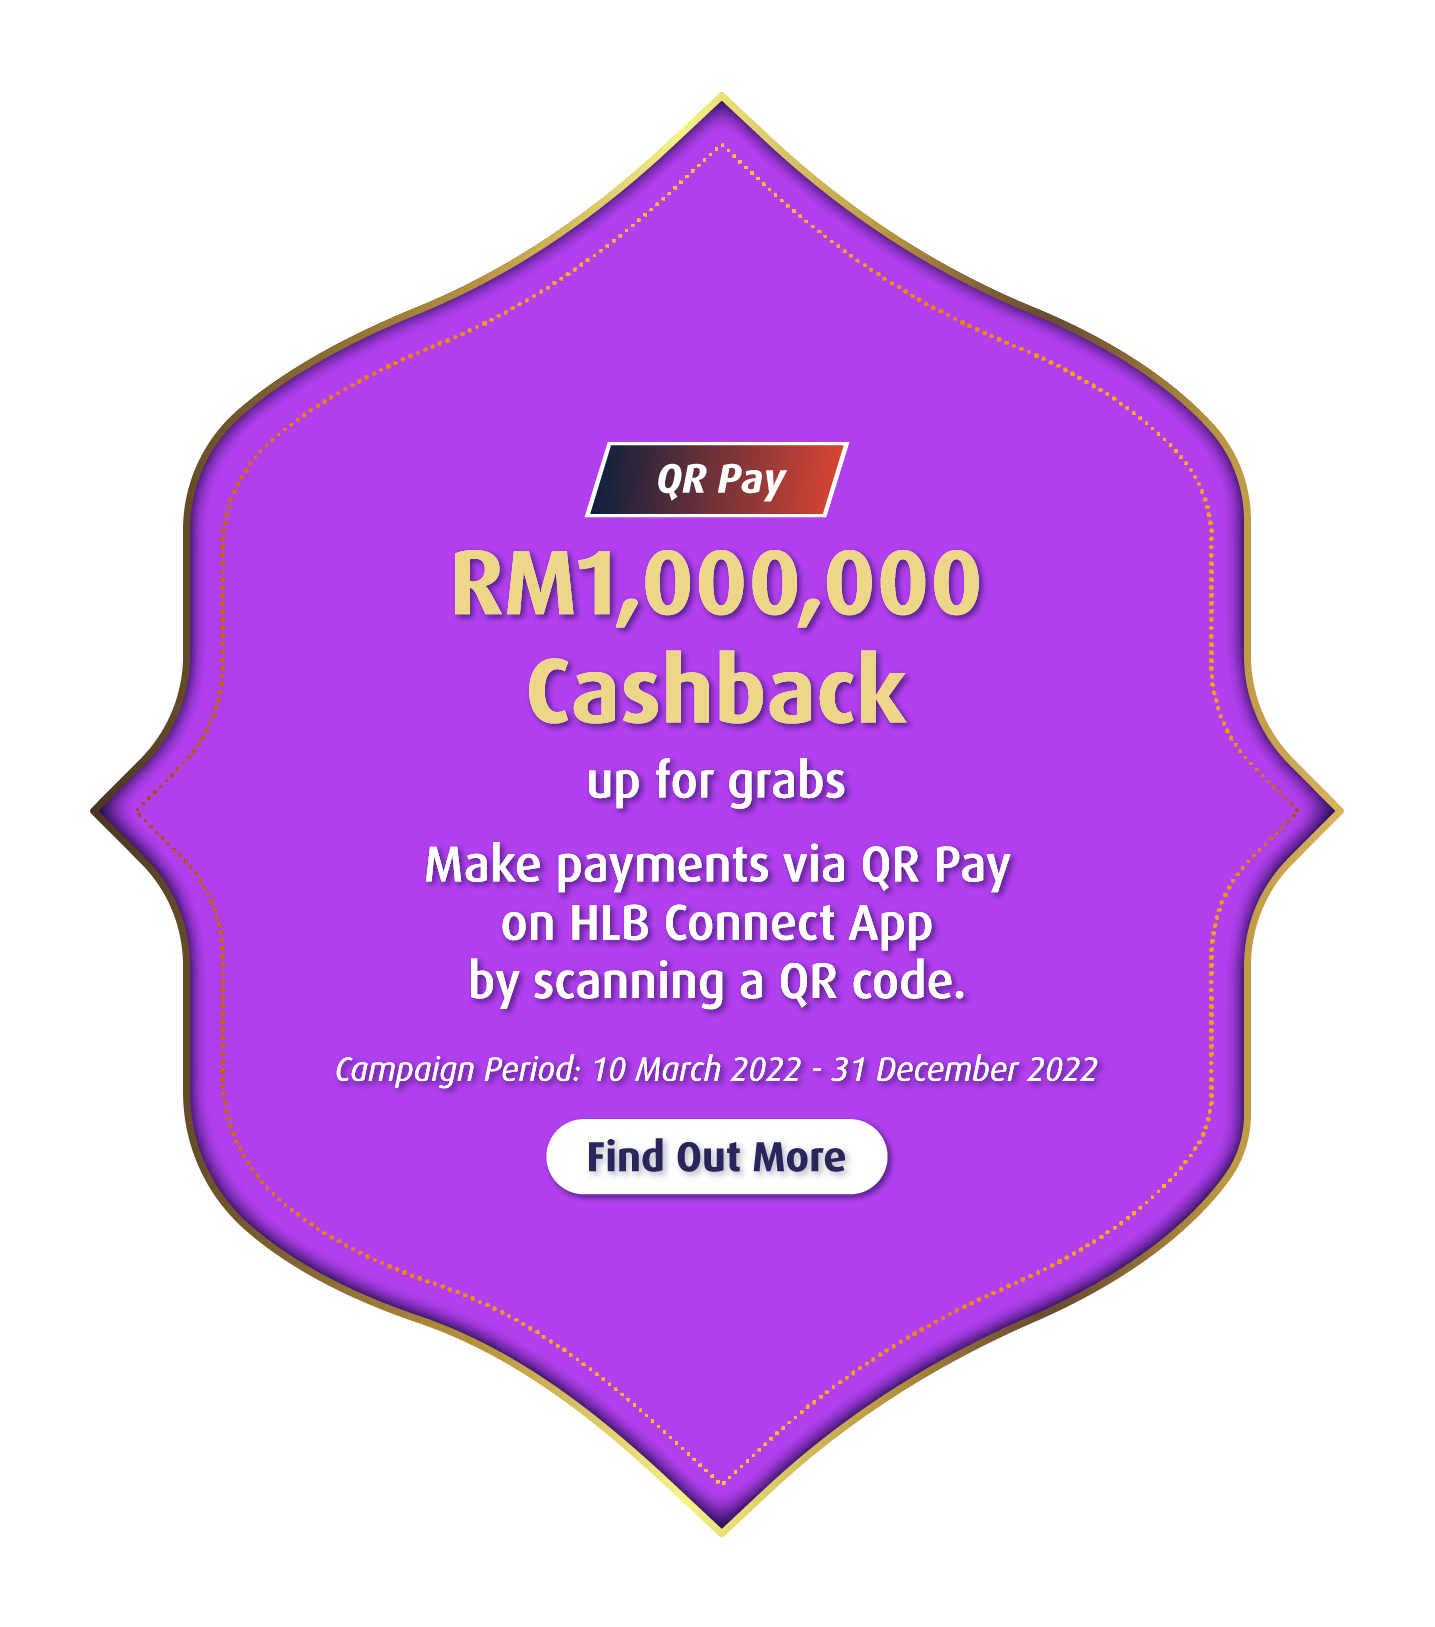 RM1,000,000 Cashback up for grabs